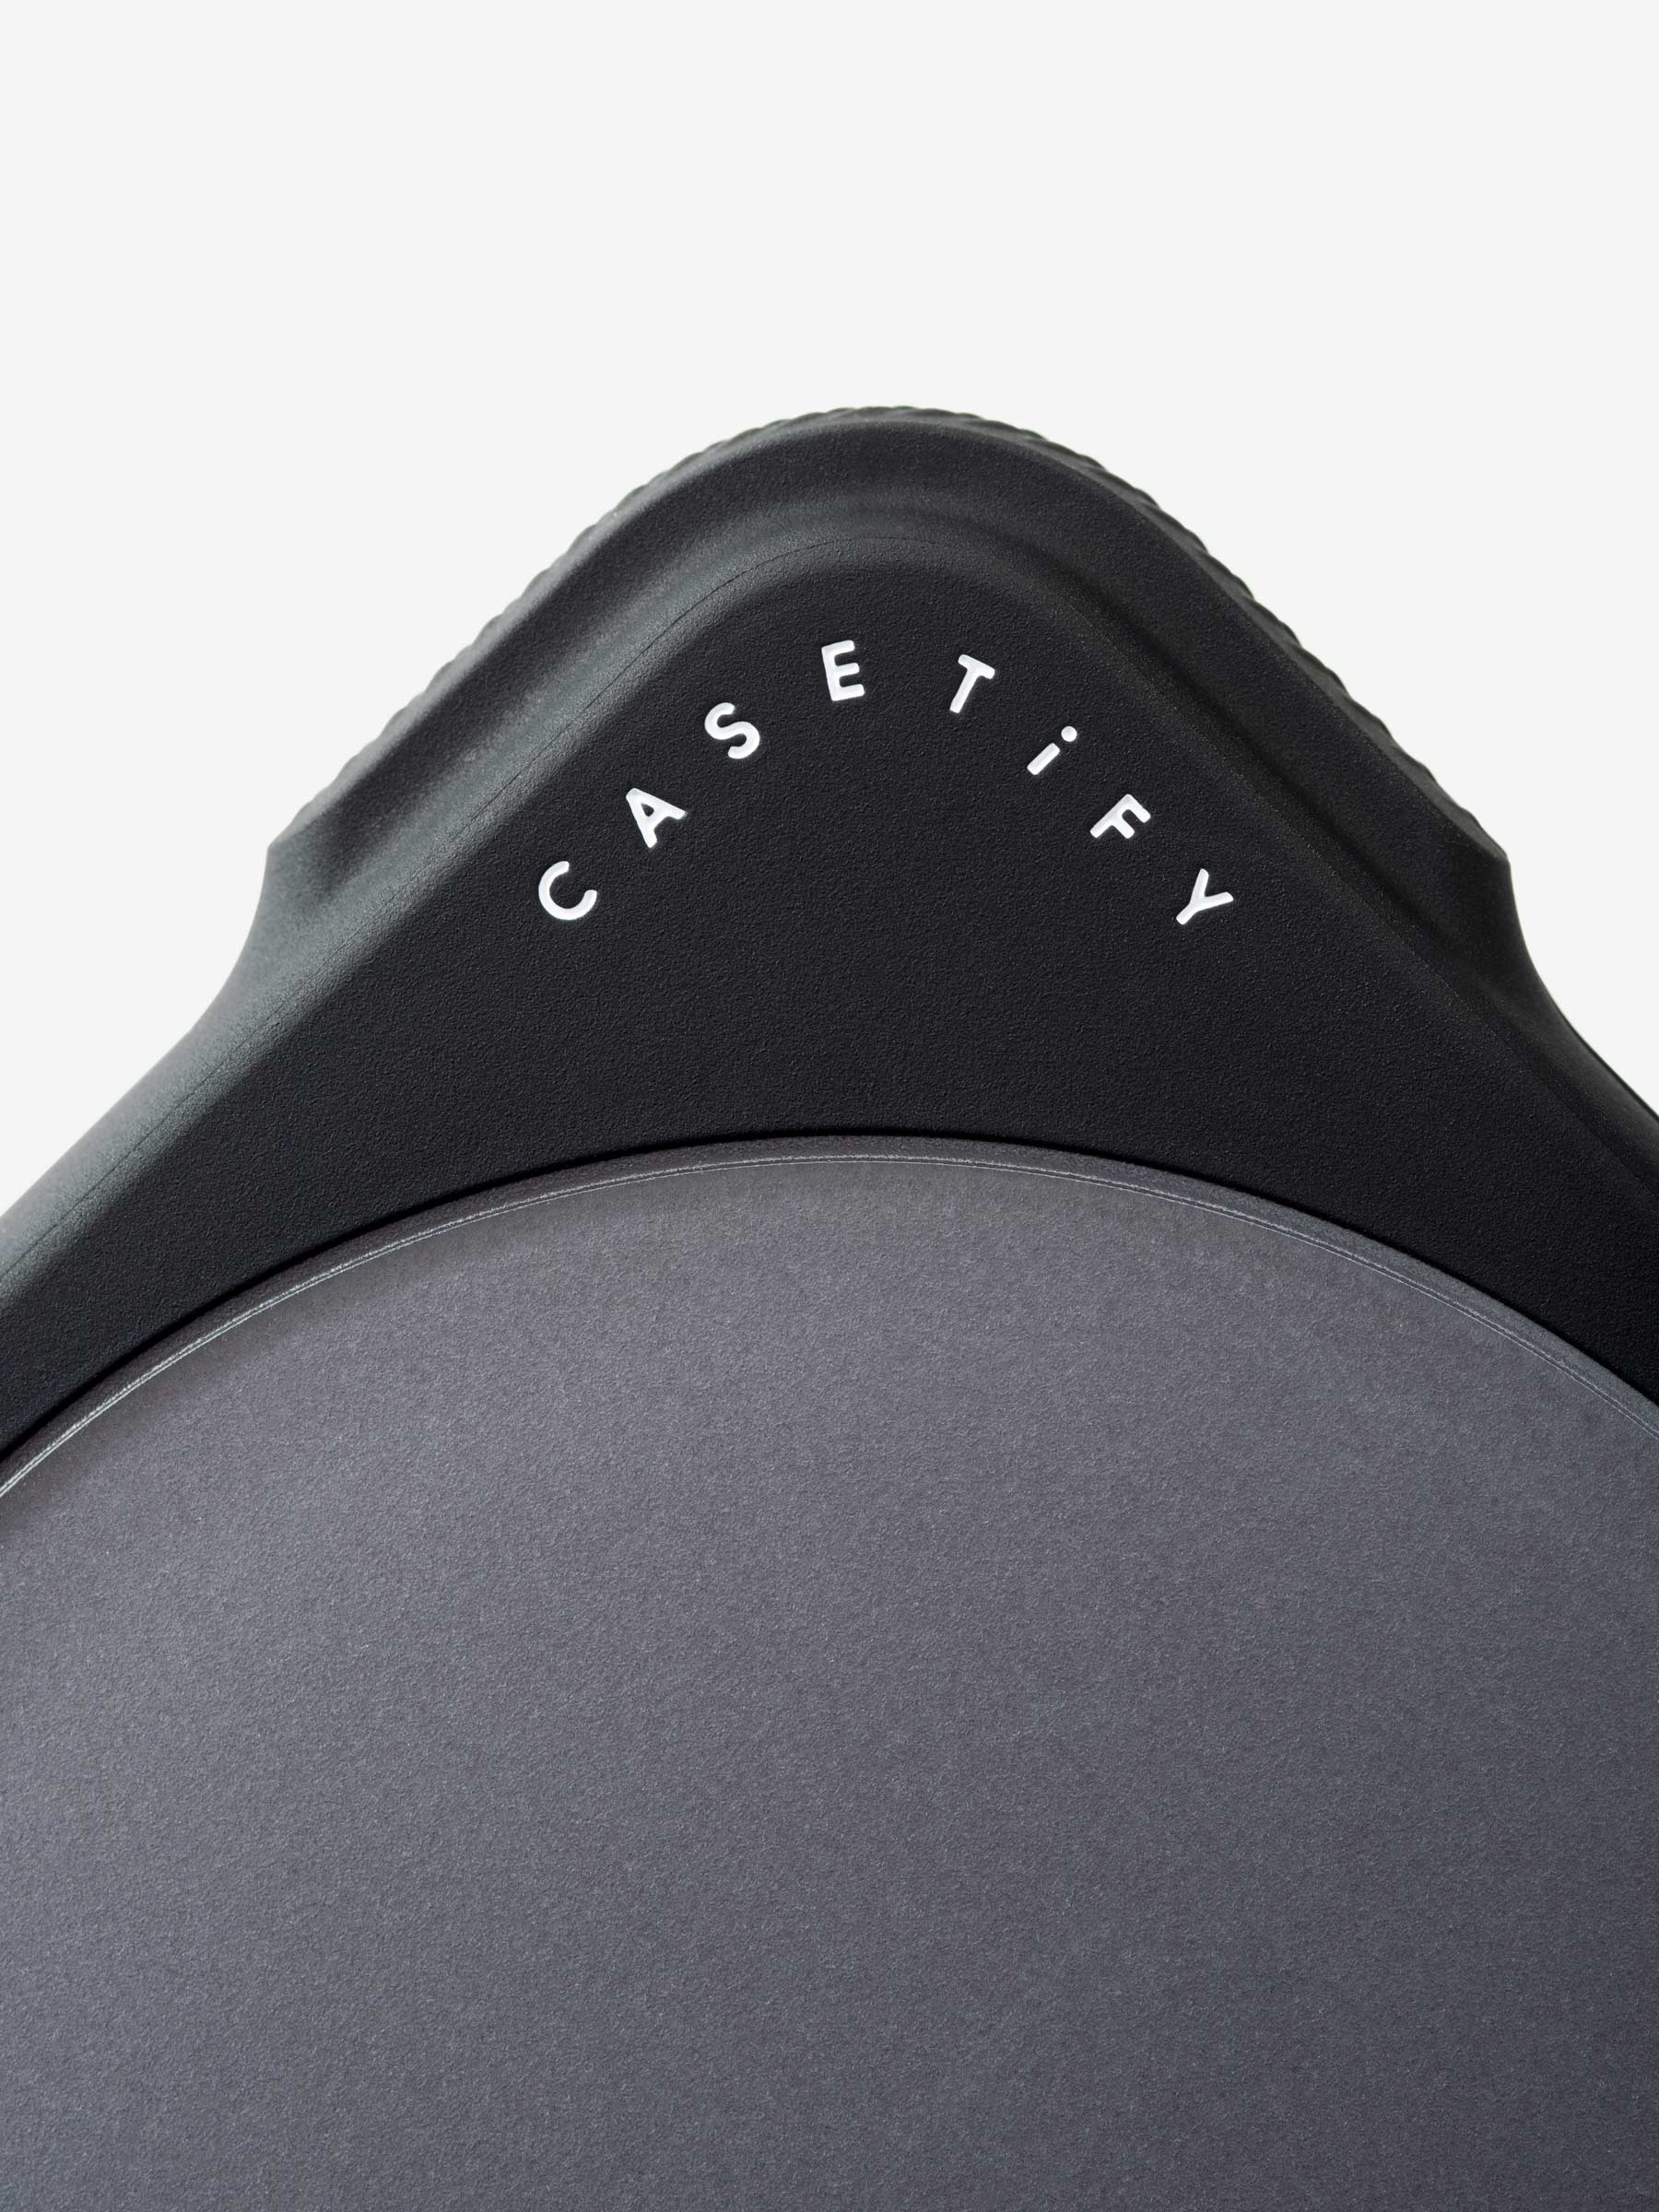 Casetify Accessories Designed by Ponti Design Studio